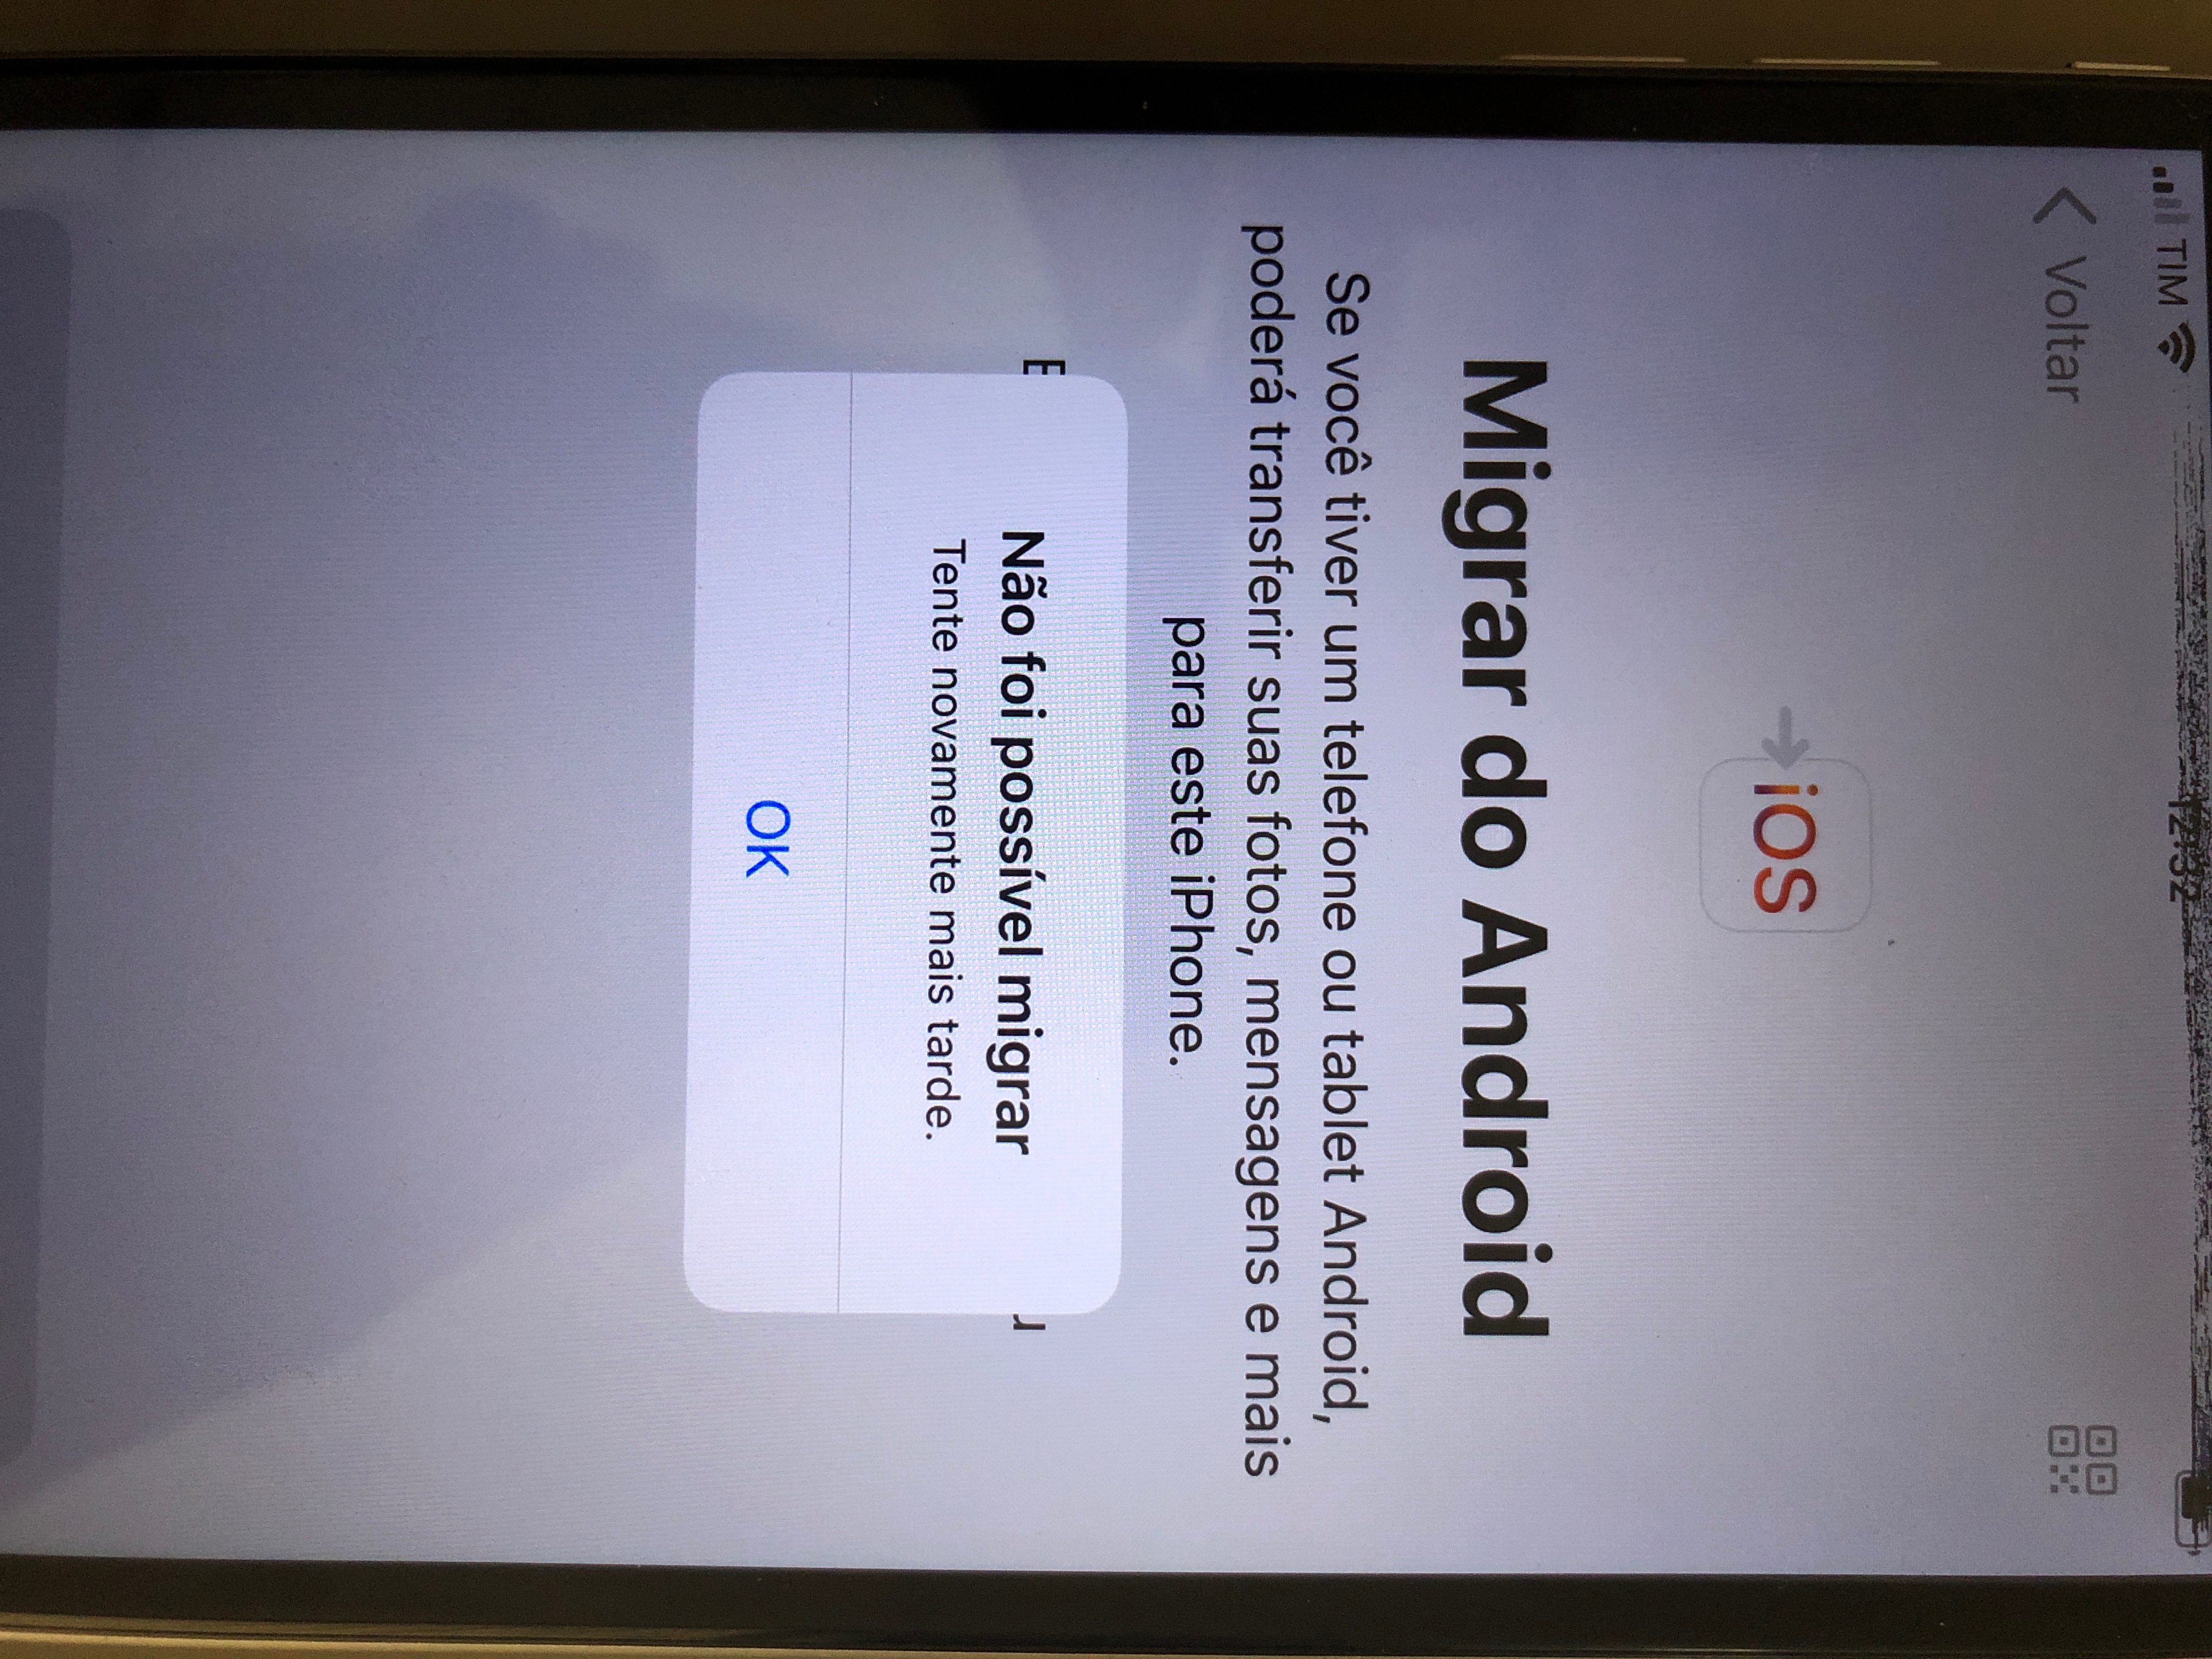 Migrar do Android para o iPhone, iPad ou iPod touch - Suporte da Apple (BR)